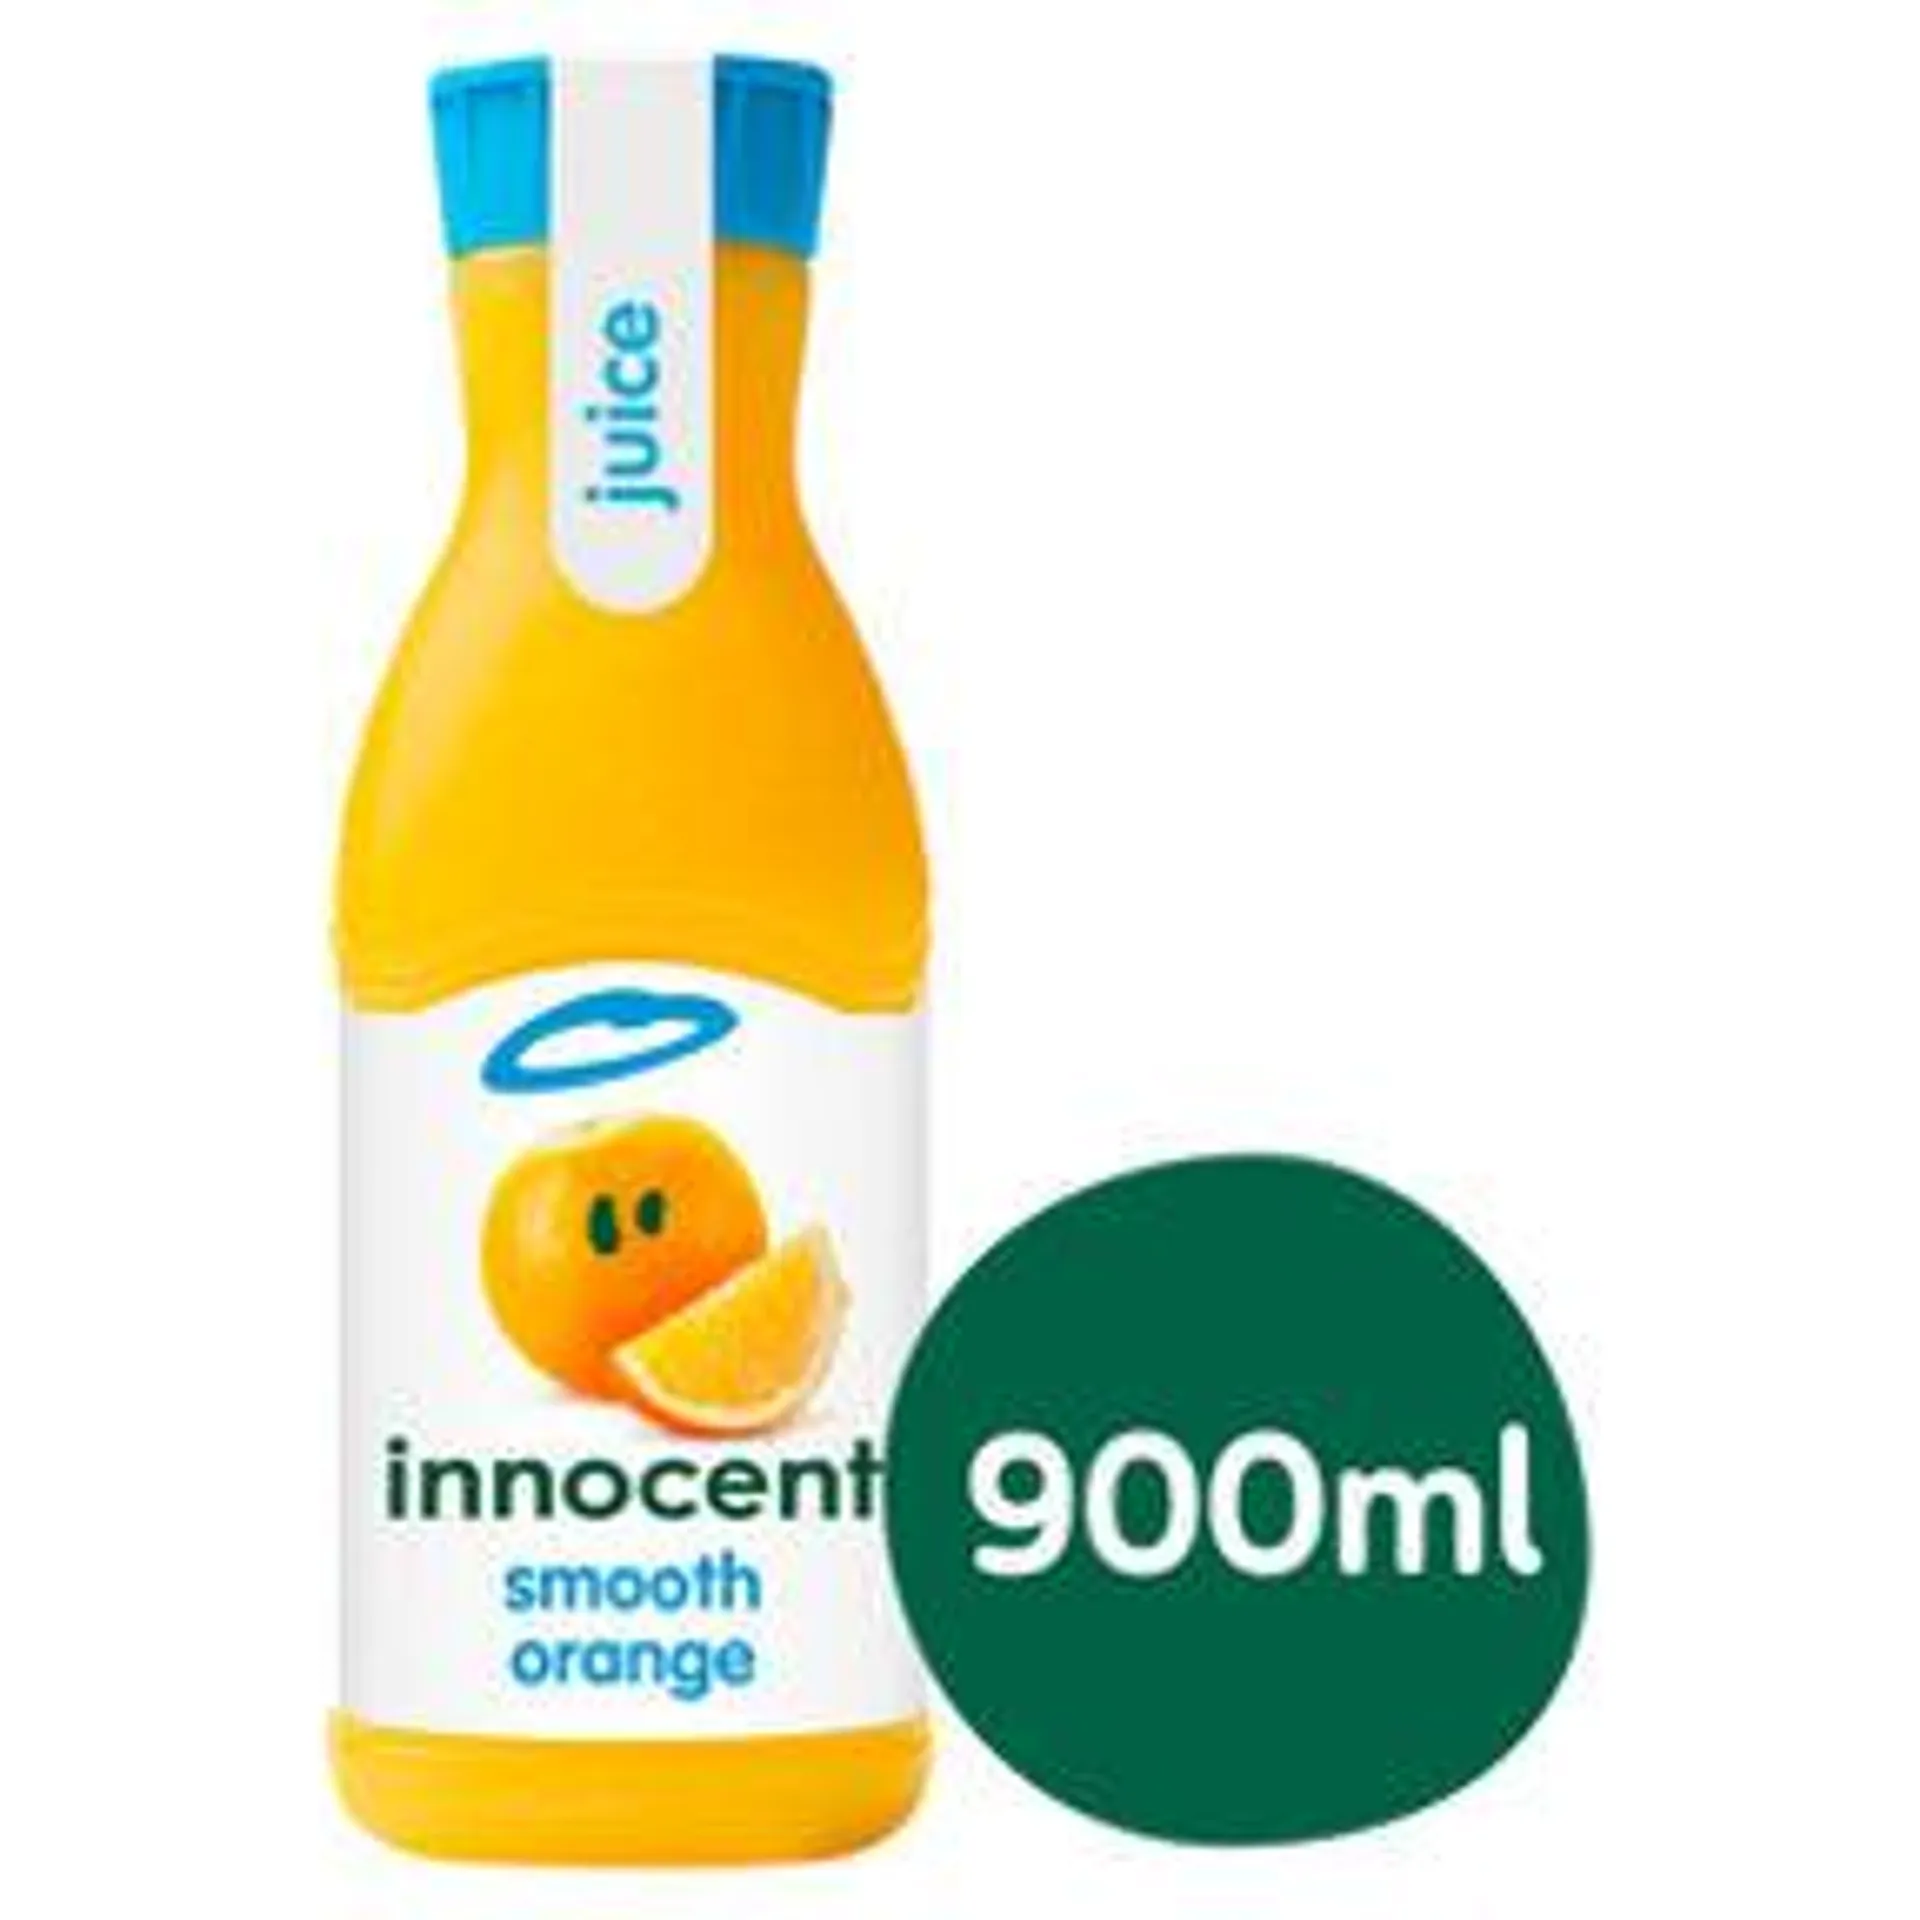 Innocent Orange Juice smooth 900ml